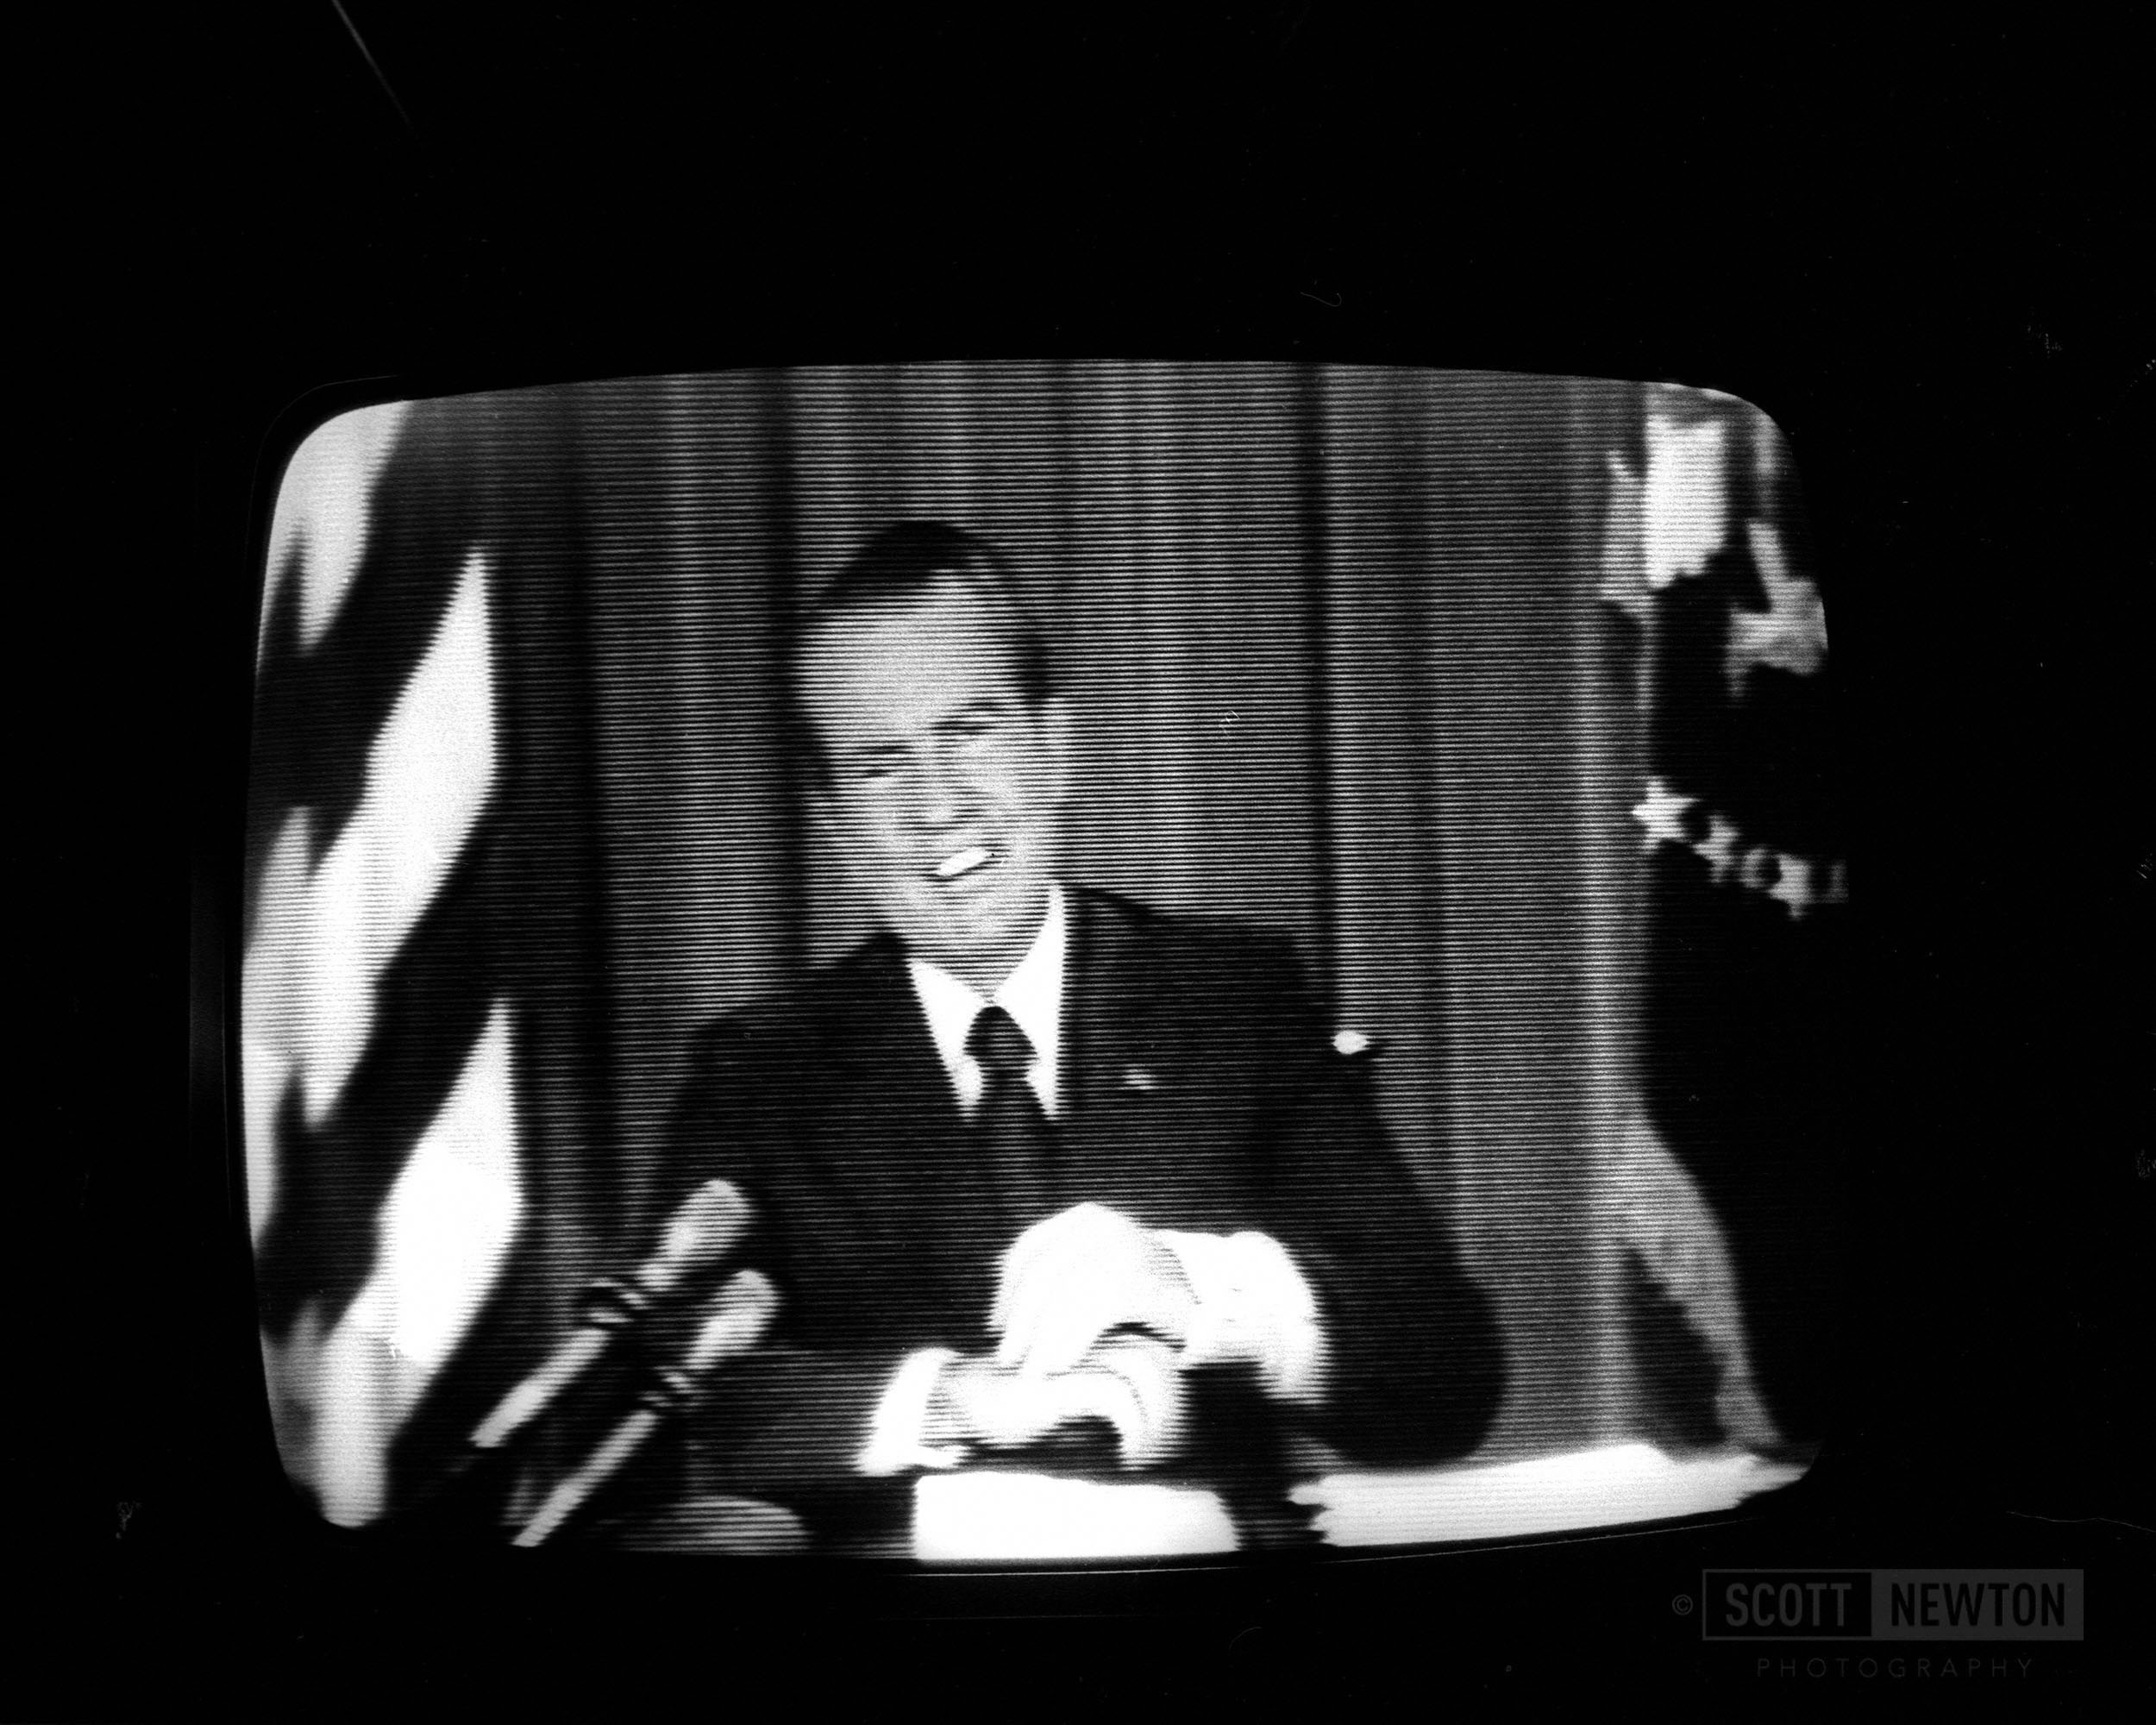 Nixon announces he's not a crook 1974